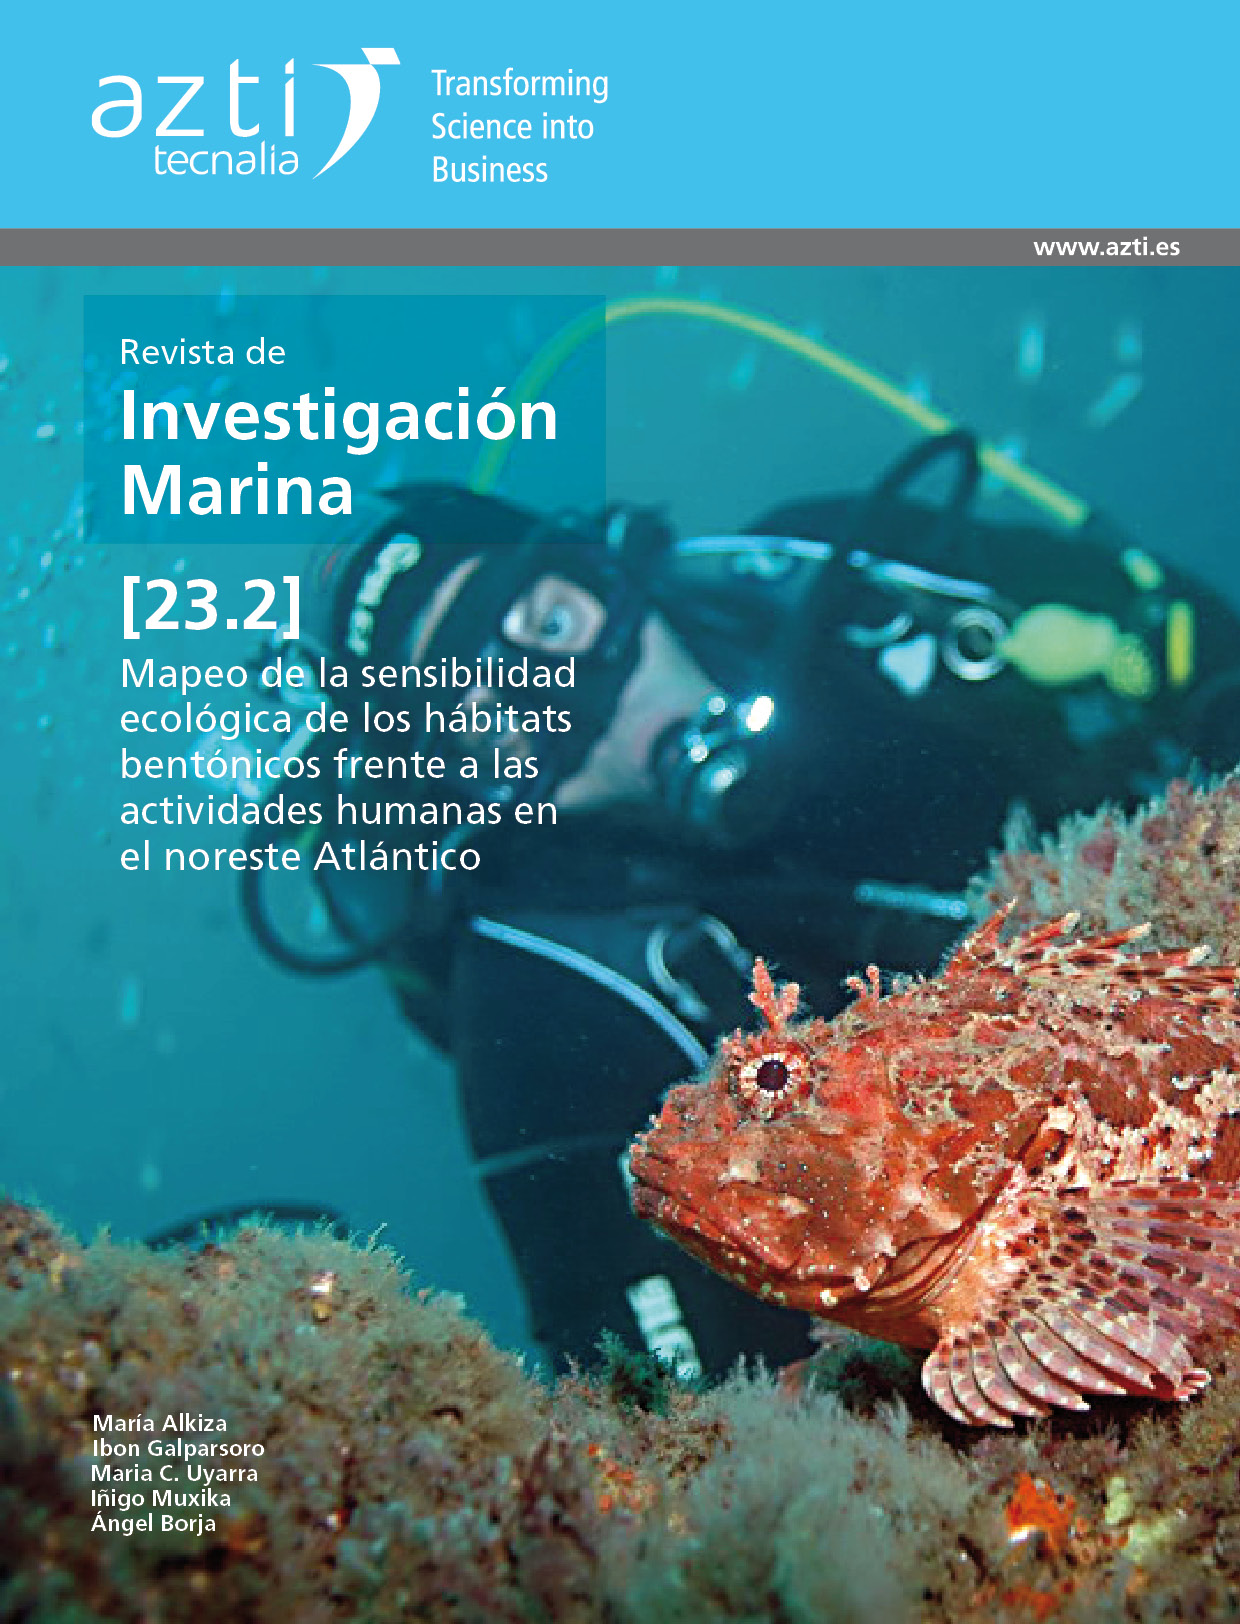 RIM .:. Revista de Investigación Marina by AZTI RIM 23(2): Mapping the  ecological sensitivity of benthic hábitats to human activities in the  european North Atlantic Ocean - RIM .:. Revista de Investigación Marina by  AZTI